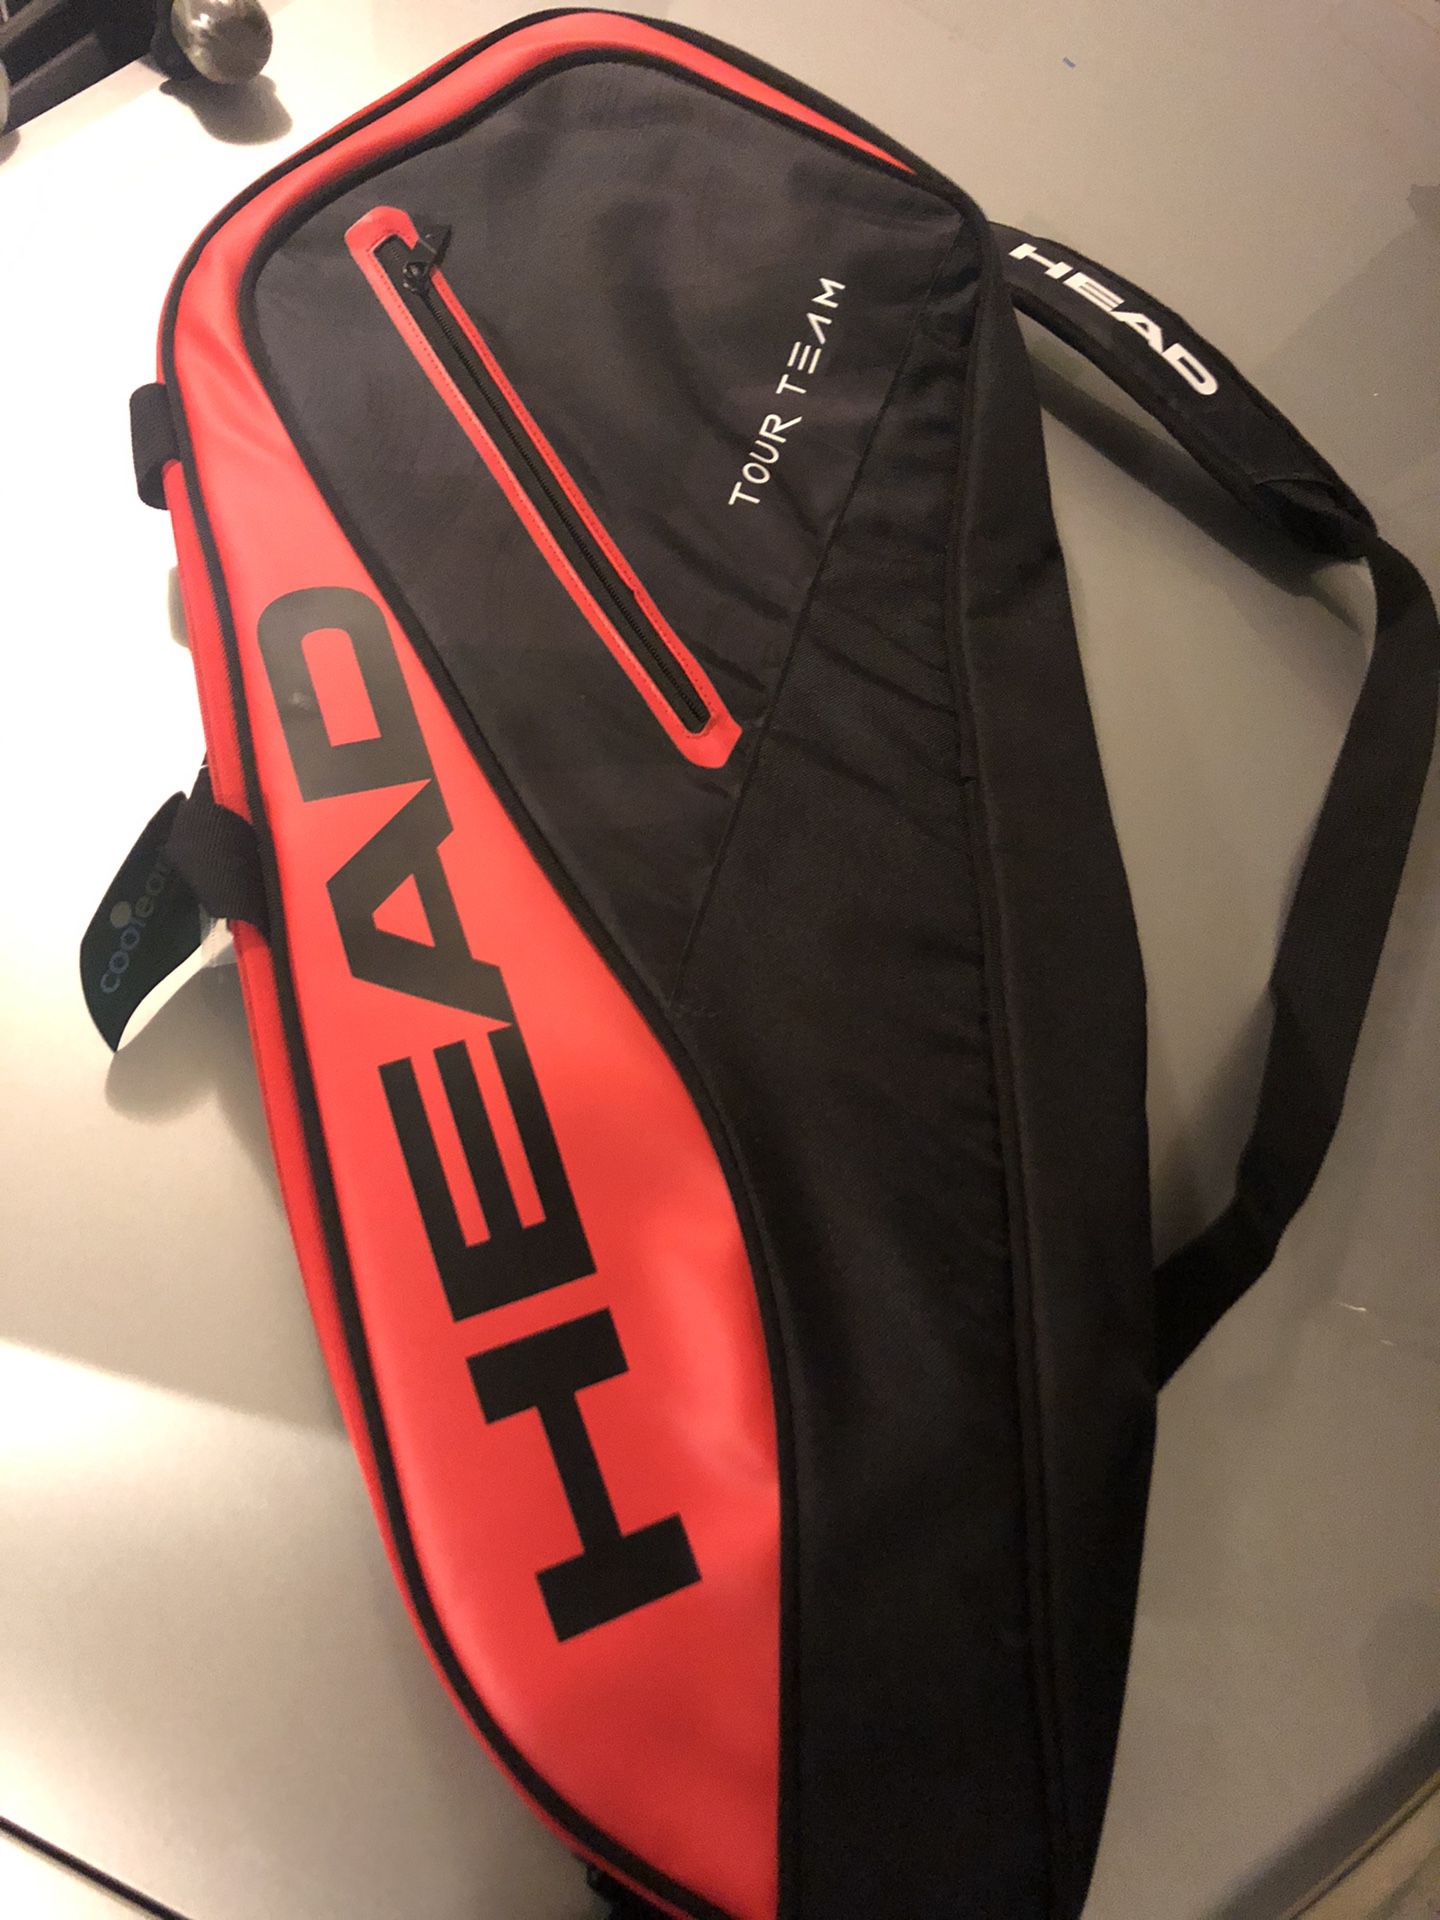 Head tennis bag holds 3 rackets